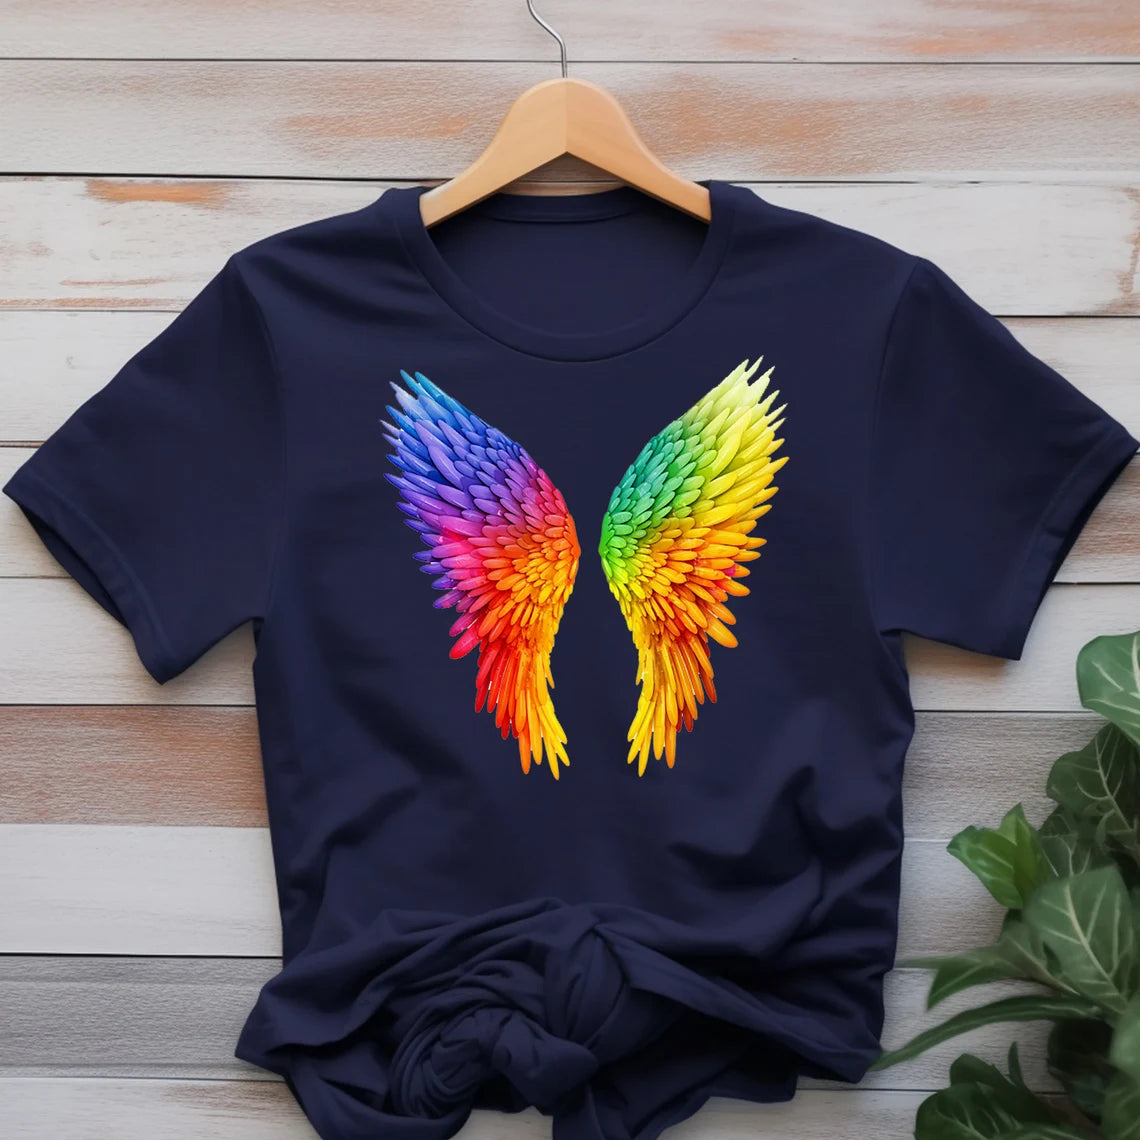 Water Color Painted Wings, Pretty Rainbow Valentine, Colorful Wings, LGBT Shirt, Pride Shirt, Trans Pride,Gay Pride Awareness